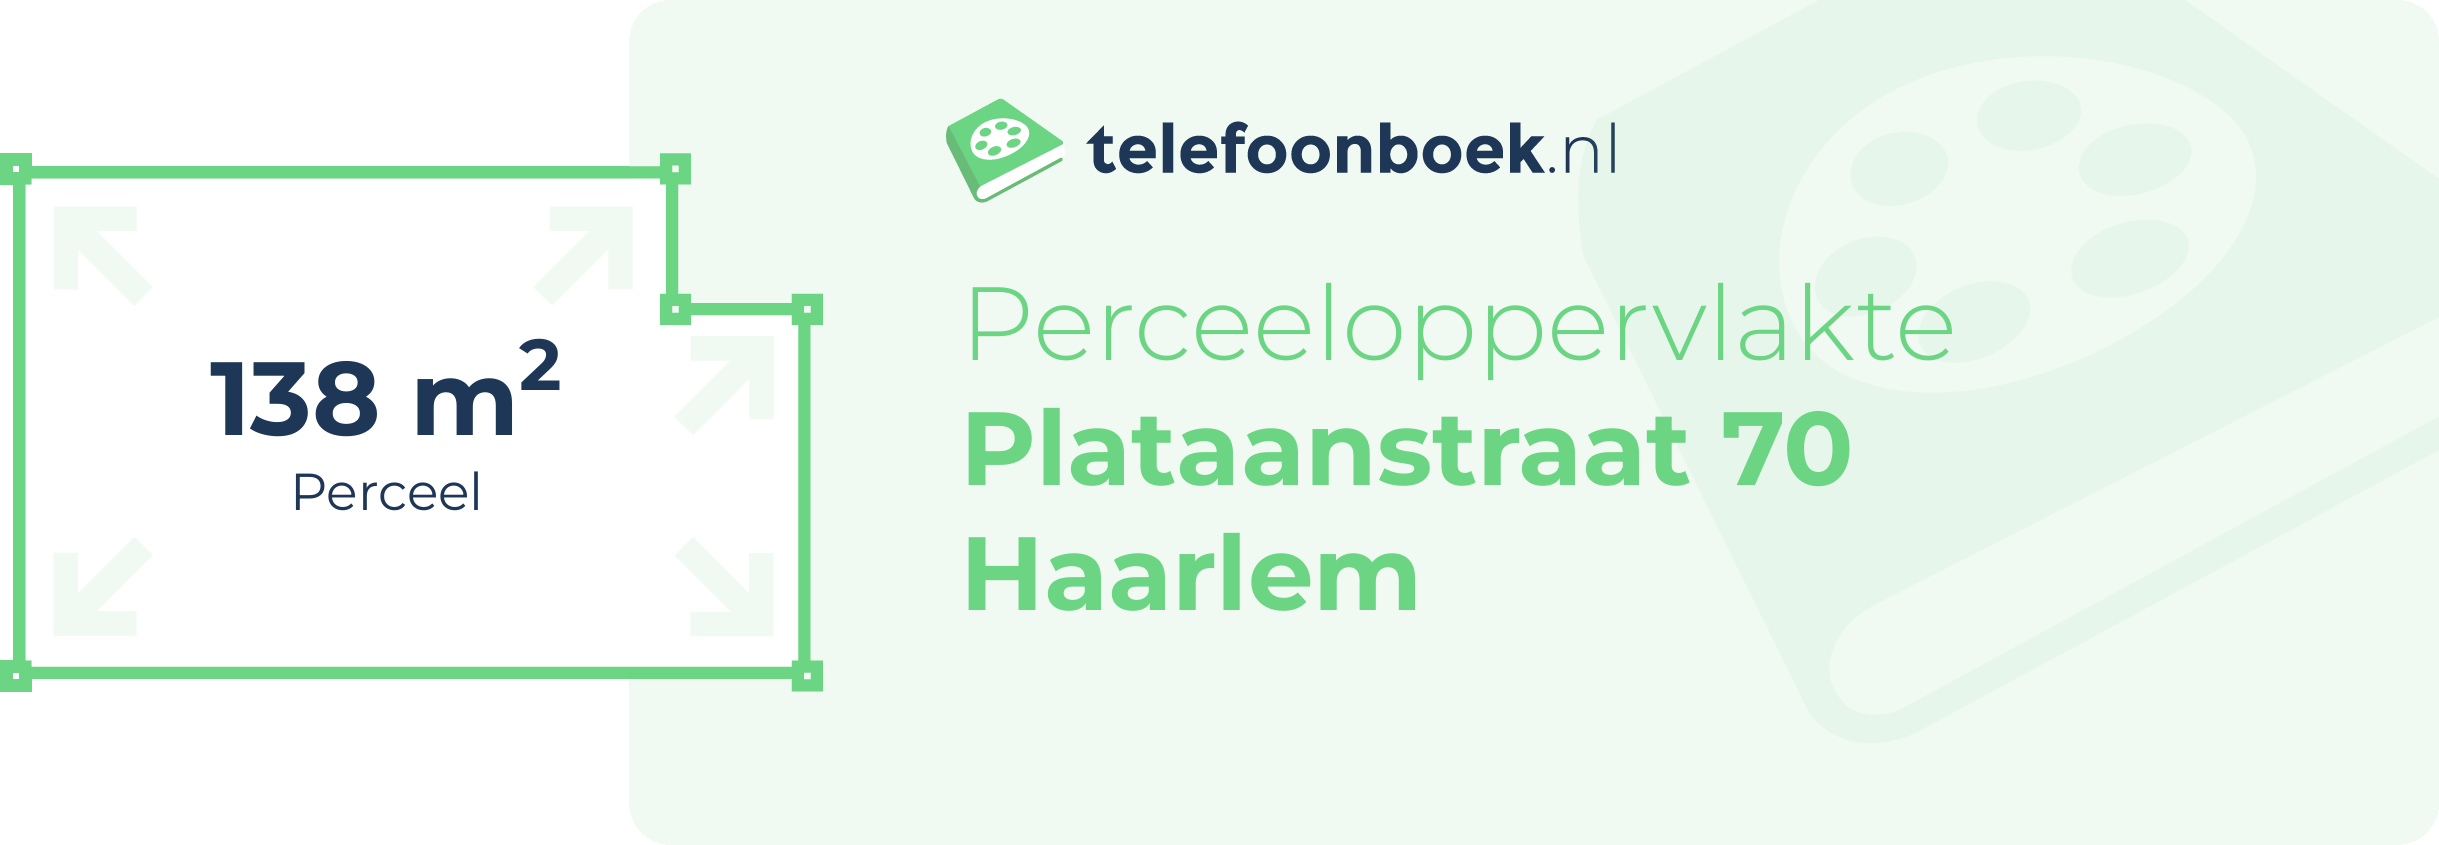 Perceeloppervlakte Plataanstraat 70 Haarlem